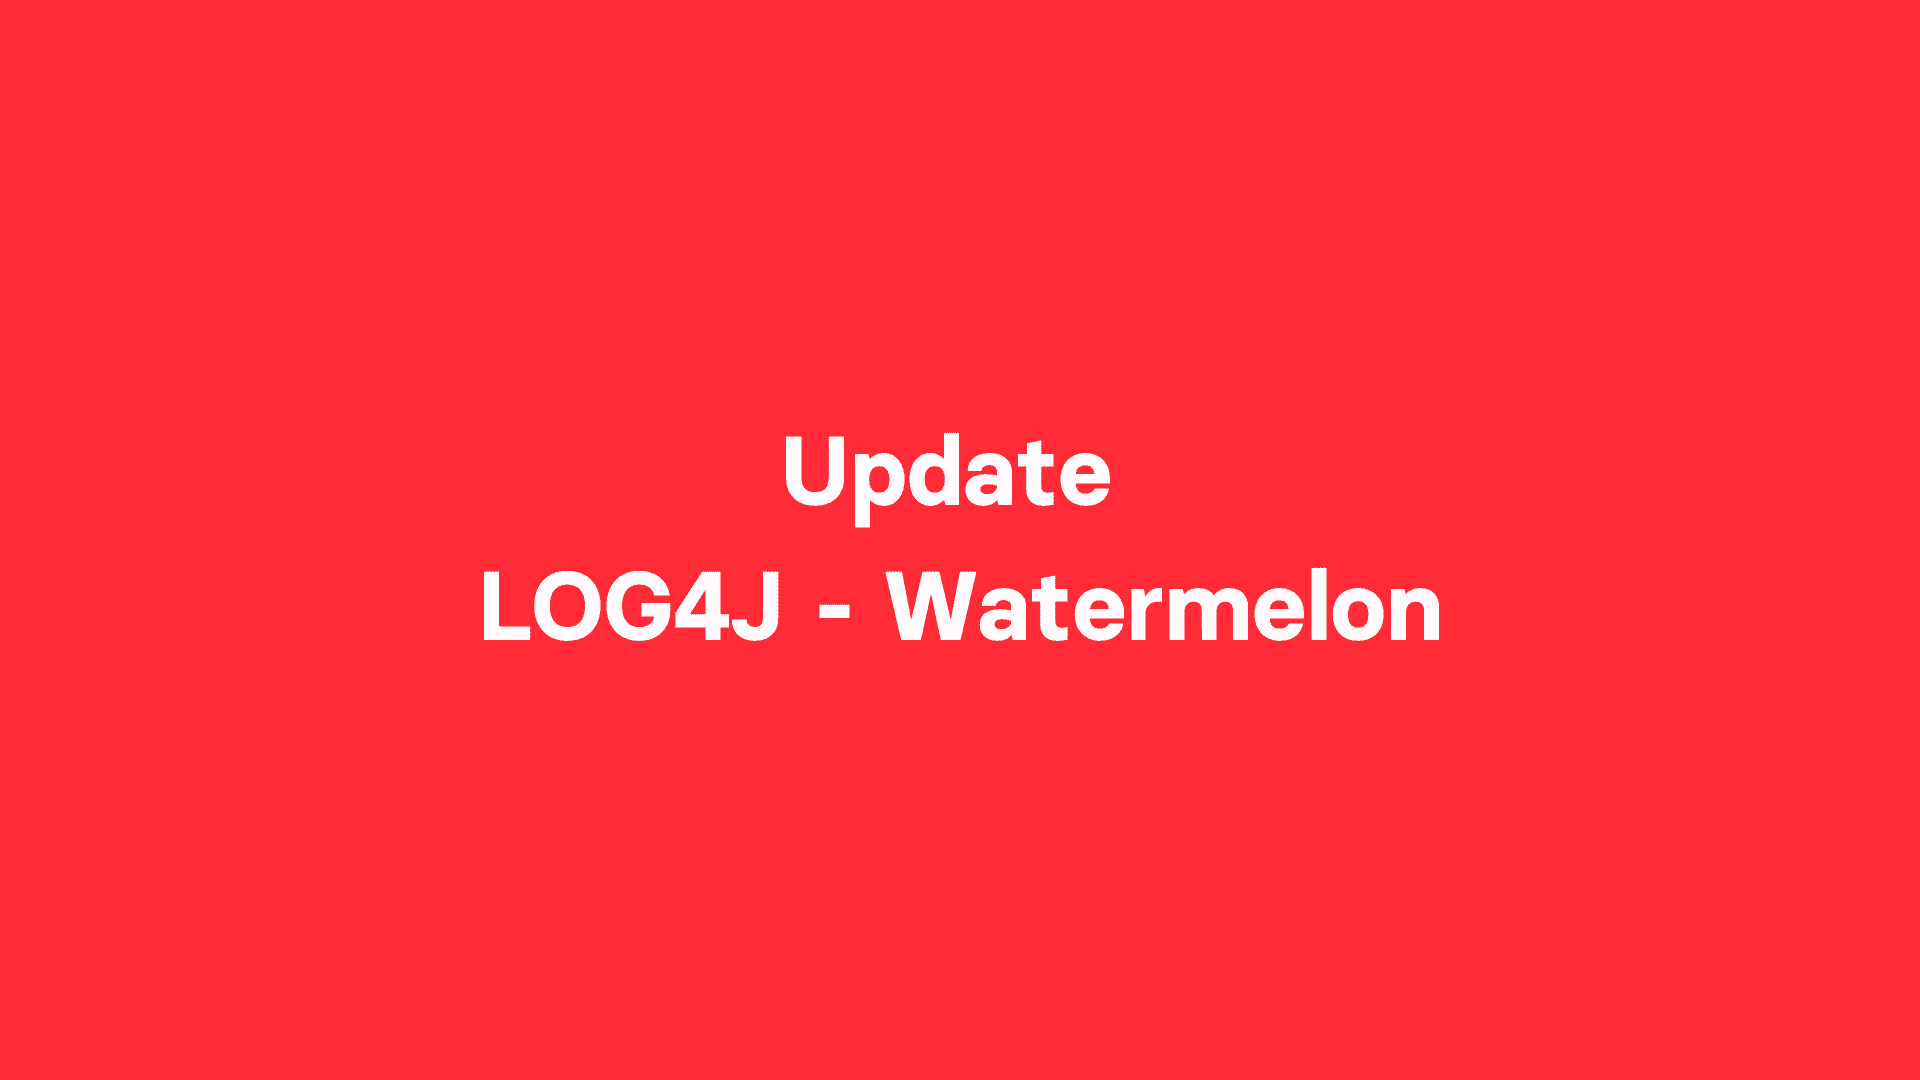 Update LOG4J Watermelon